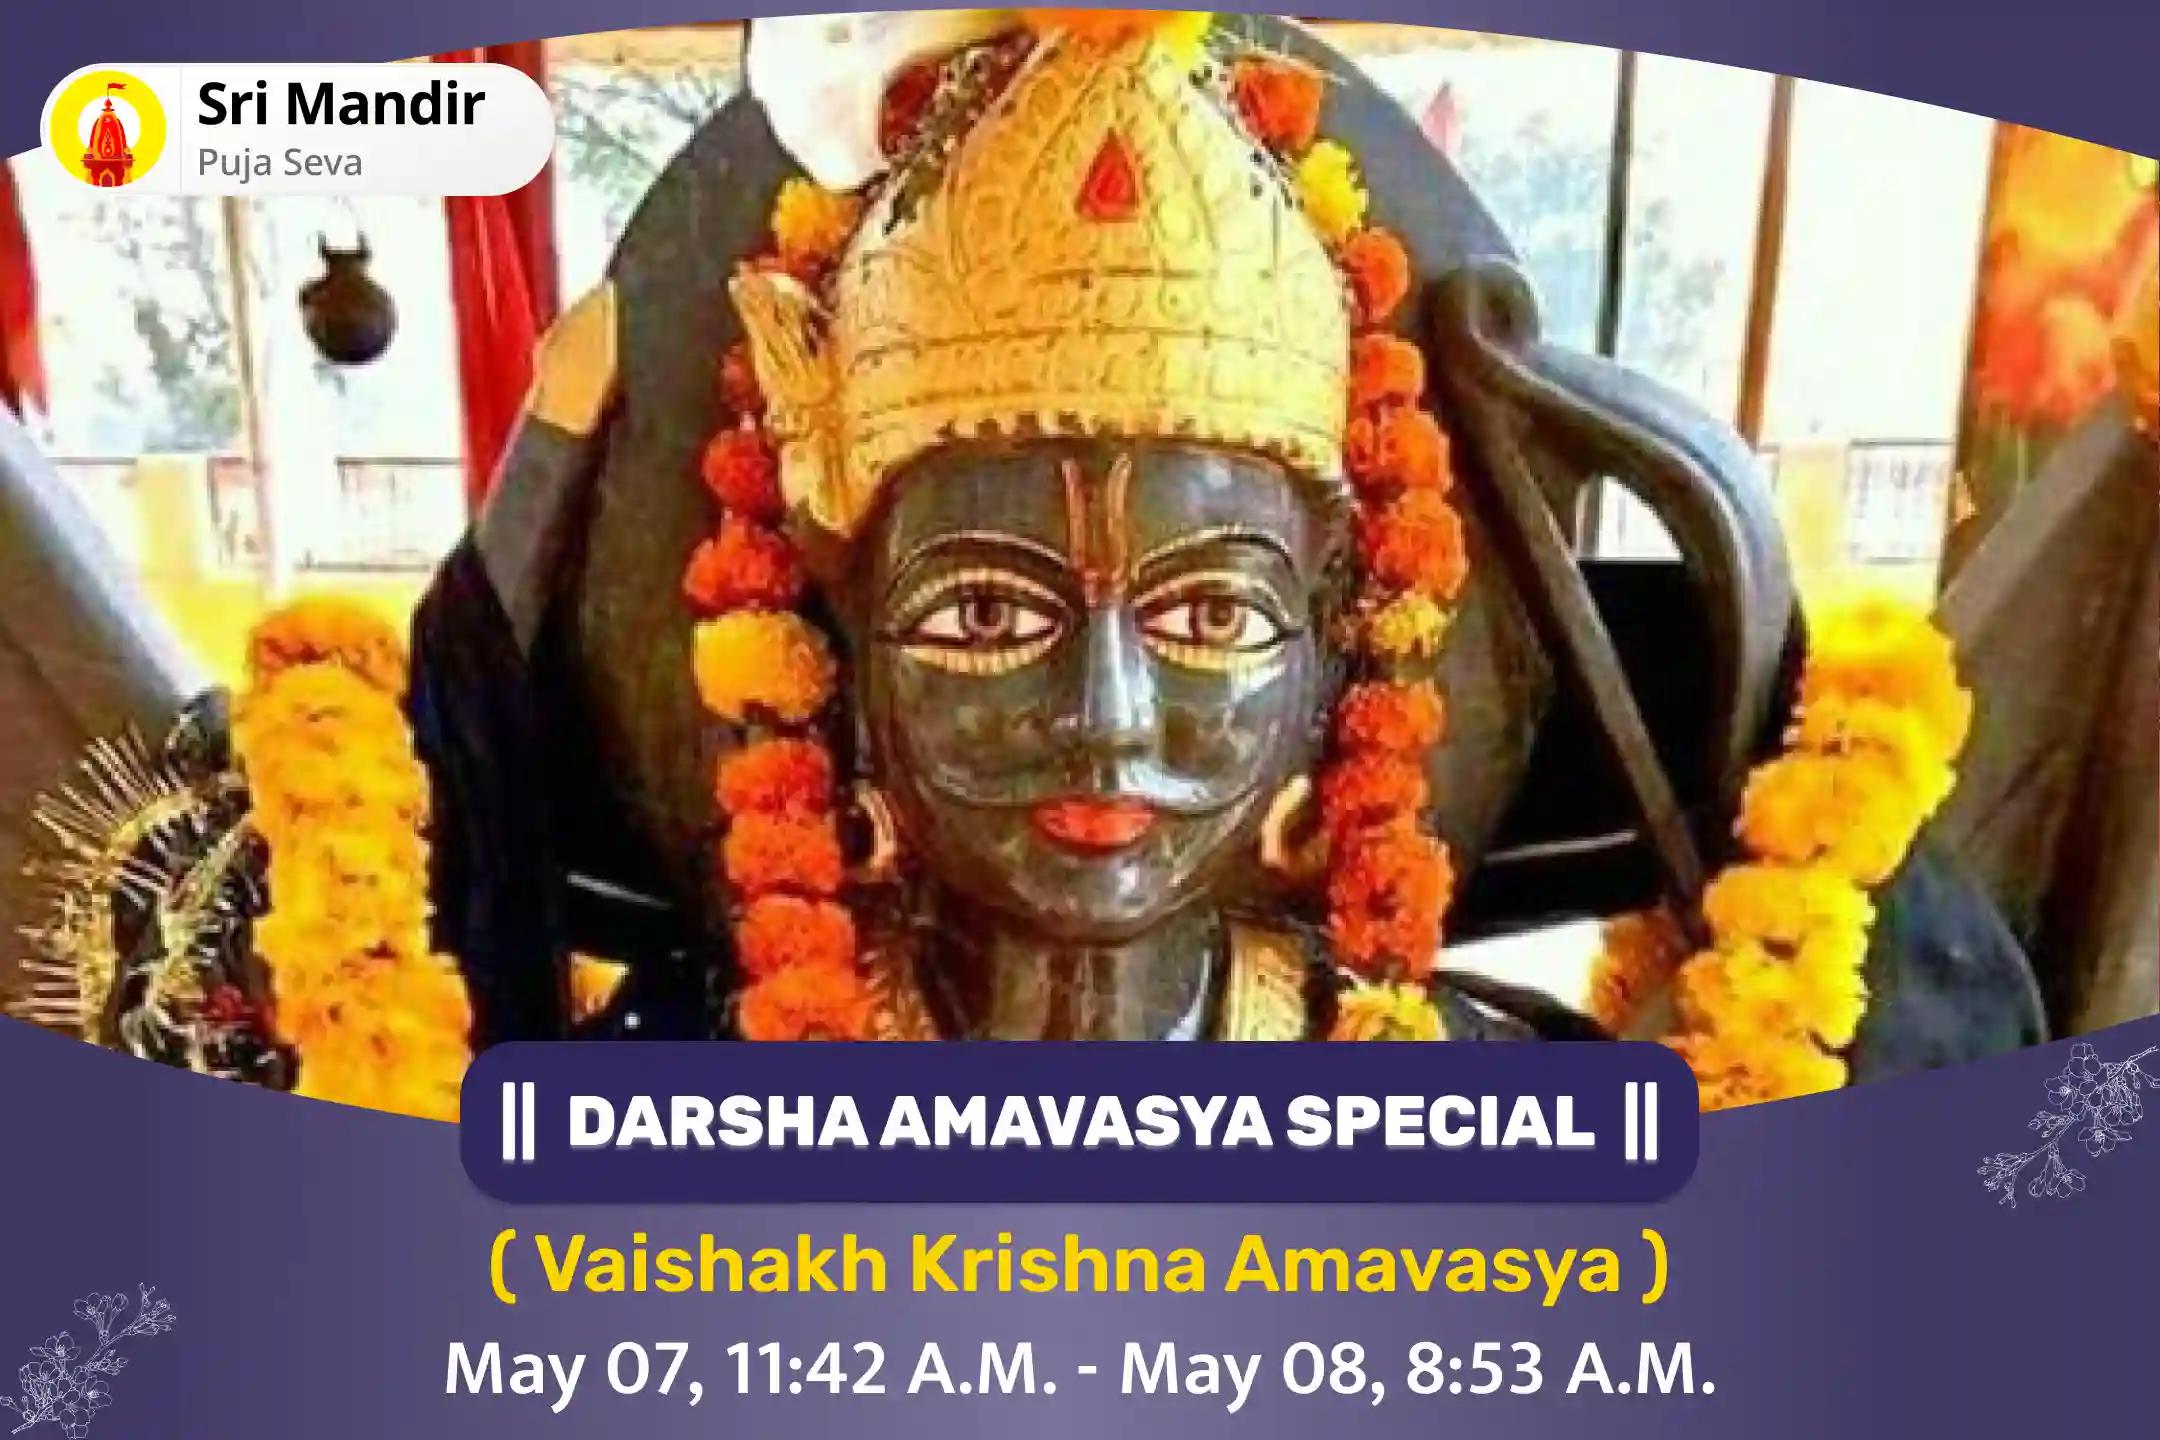 Darsha Amavasya Special Shani Til Tel Abhishek and Saade Saati Dosha Nivaran Mahapuja for Prevention of Misfortunes and Adversities